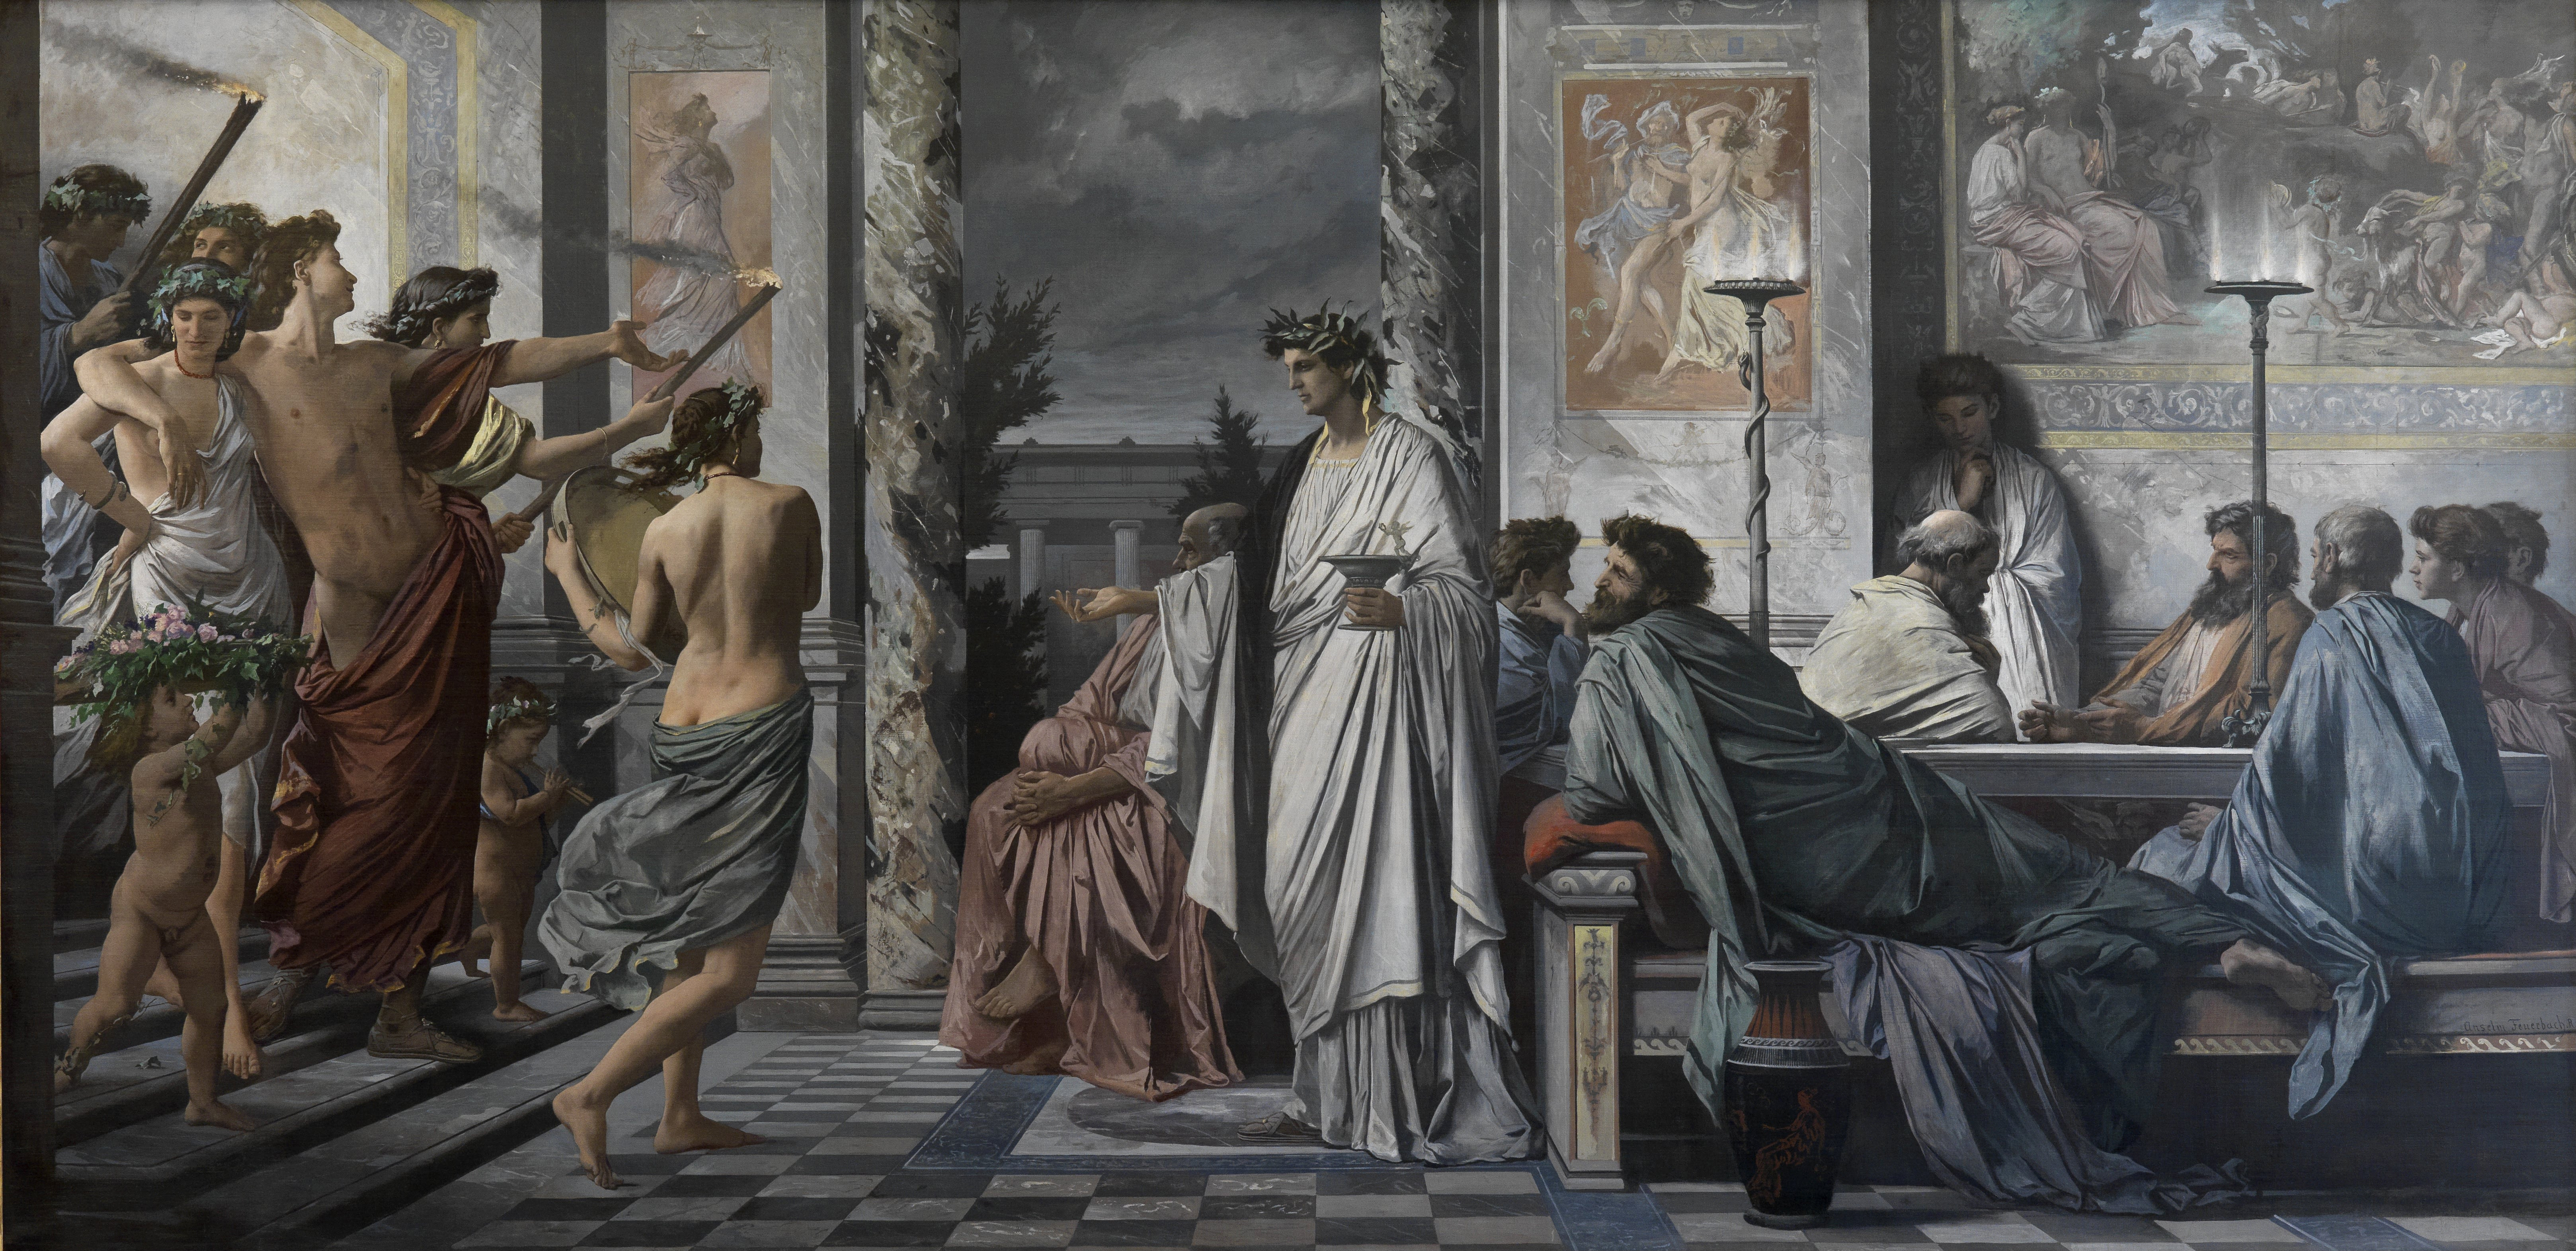 Plato's Symposium - Anselm Feuerbach - Google Cultural Institute.jpg